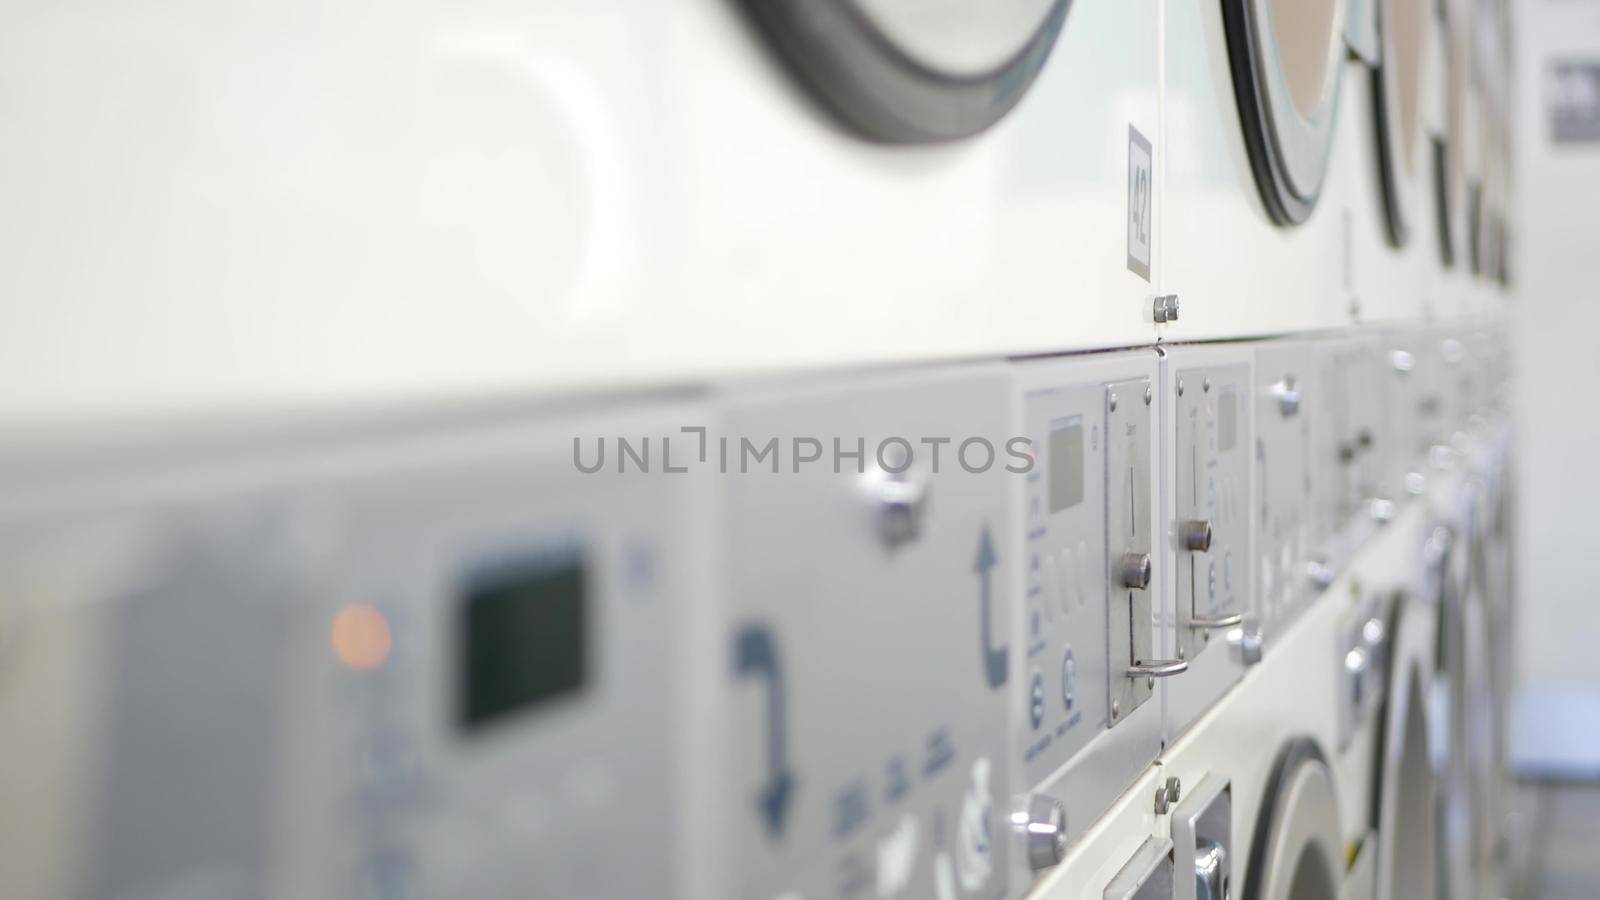 Washing machines, public coin laundry, USA. Self-service laundromat, laundrette. by DogoraSun